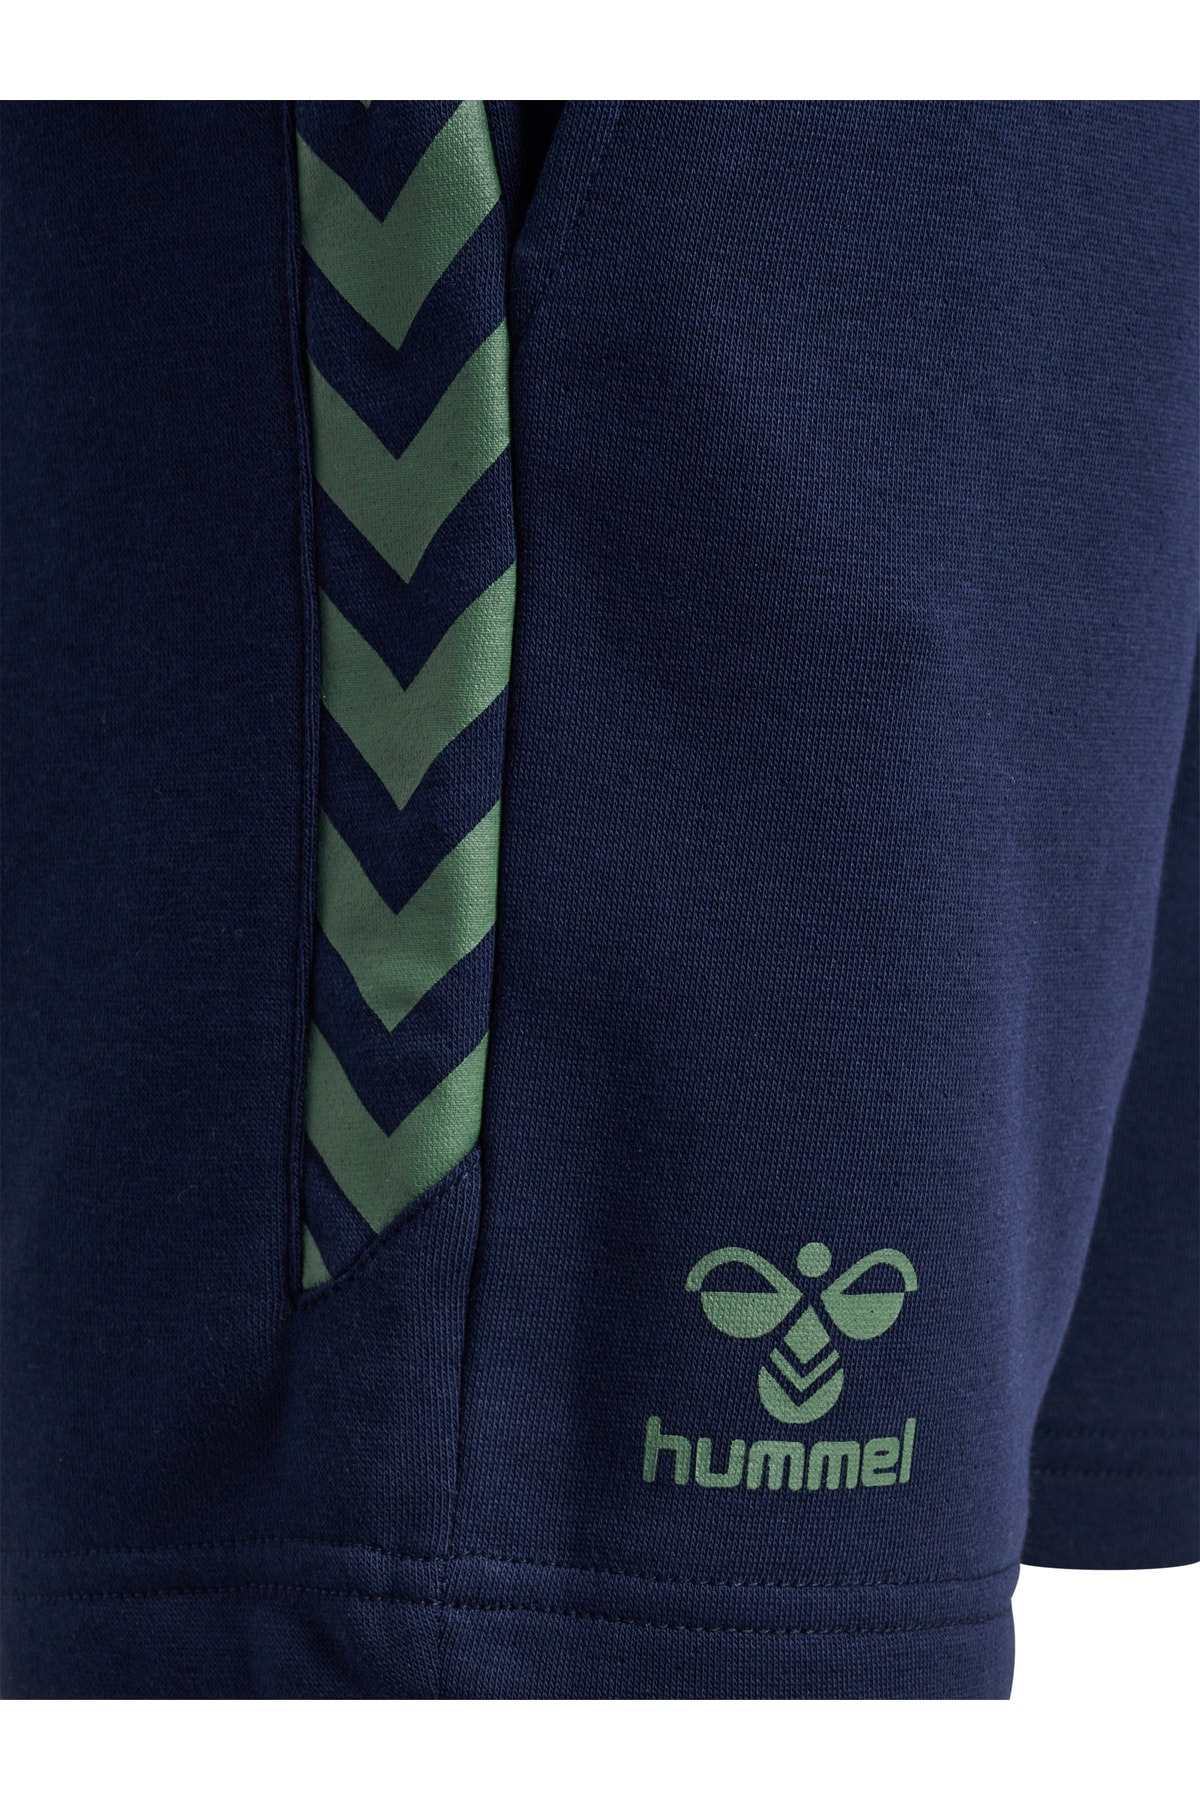 HUMMEL Kurze Sporthose Dunkelblau Mittlerer Bund EH7685